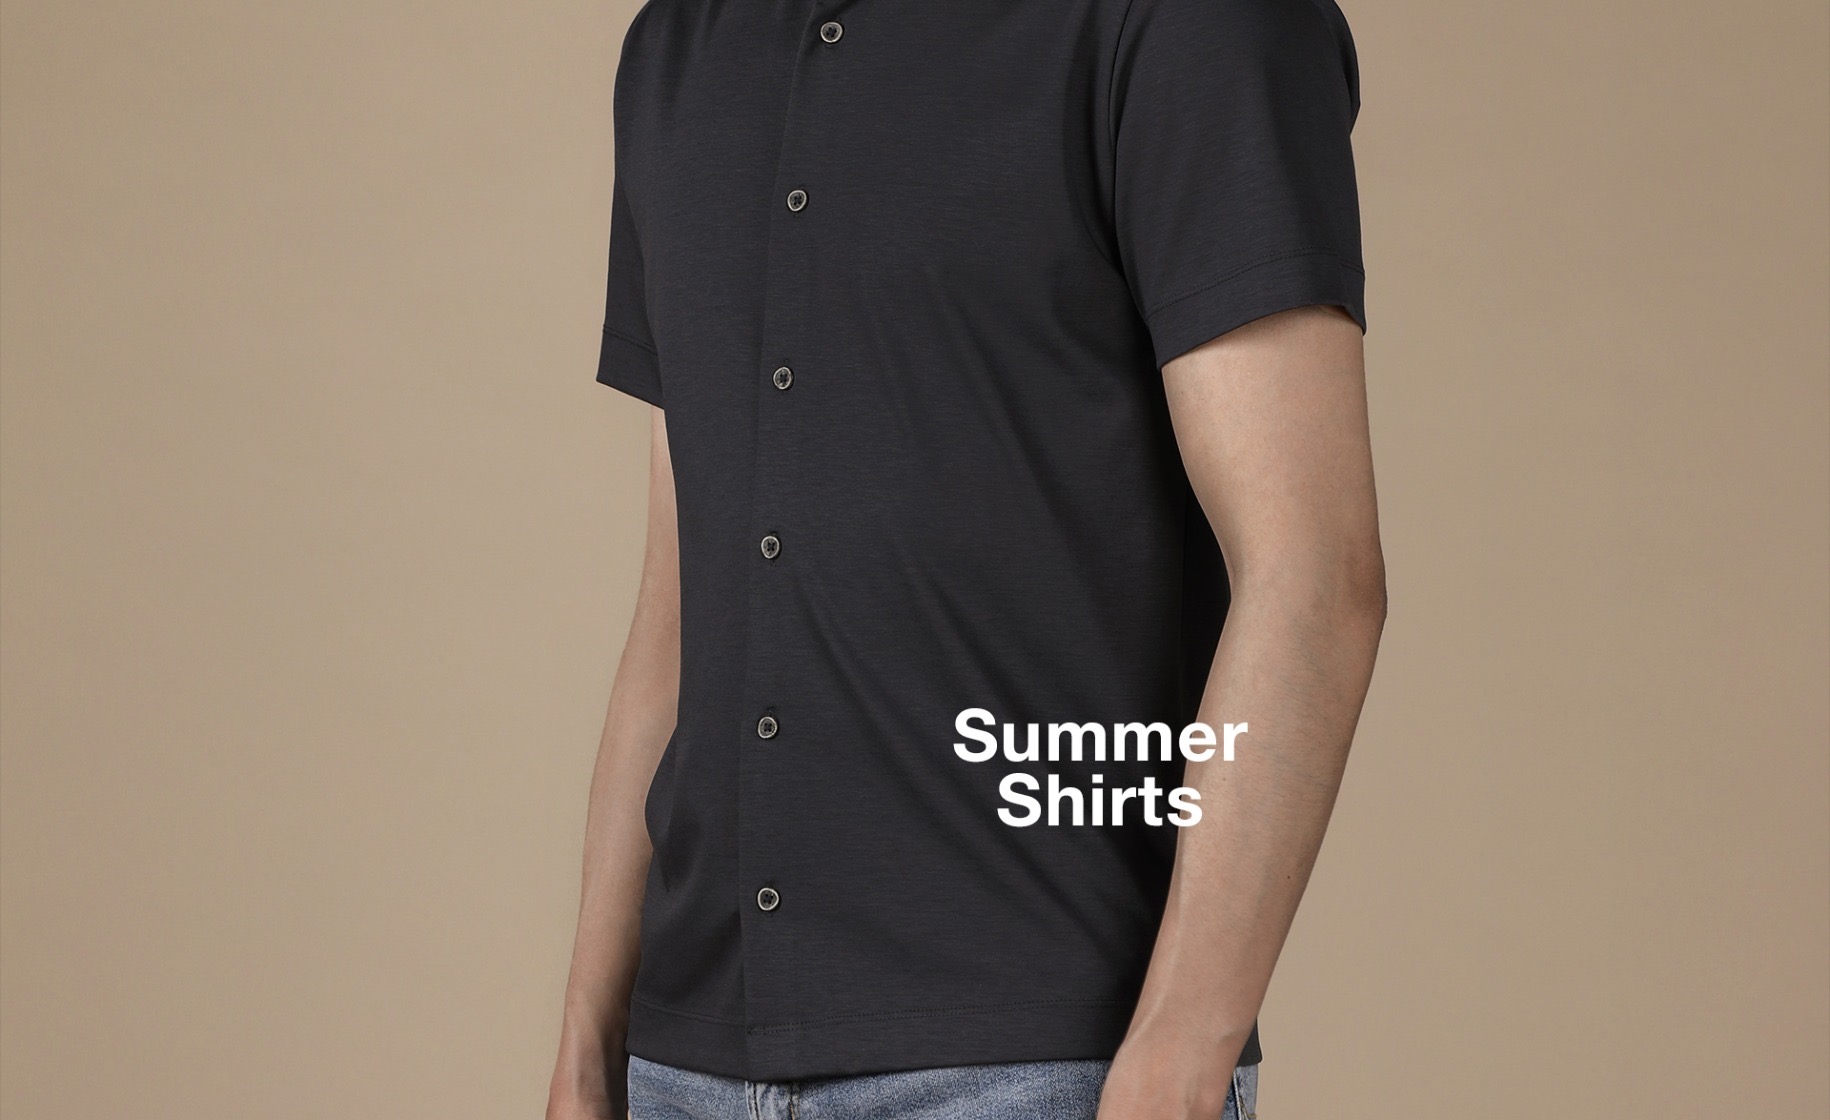 In Depth: Summer Shirts